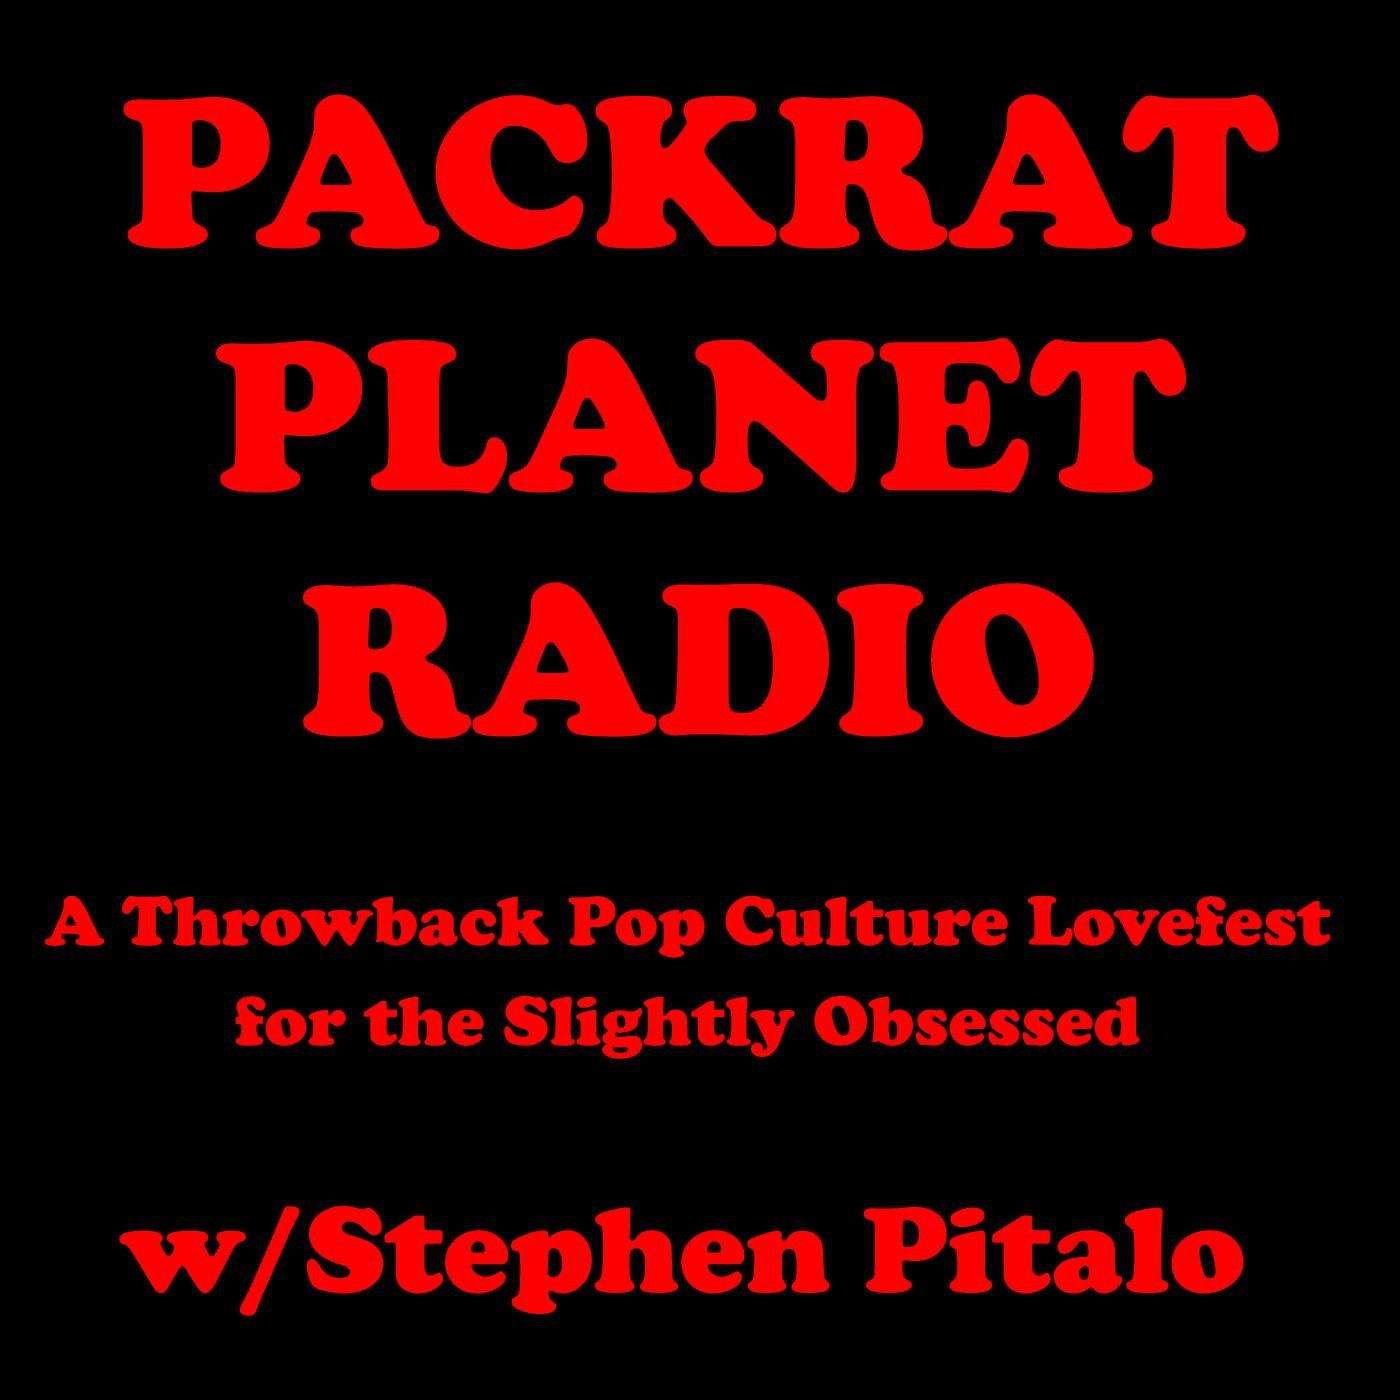 Packrat Planet Radio